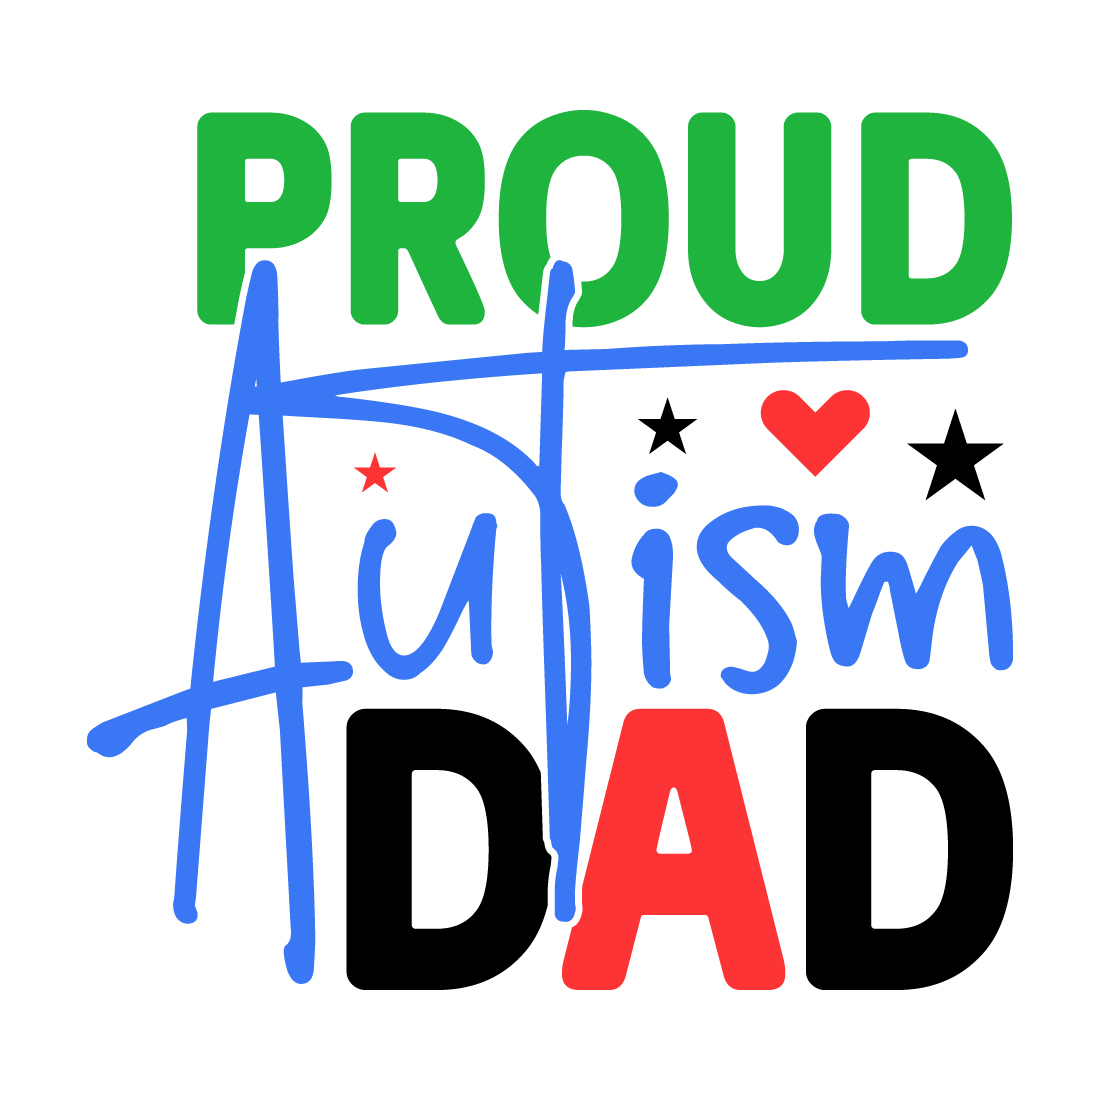 proud autism dad preview image.